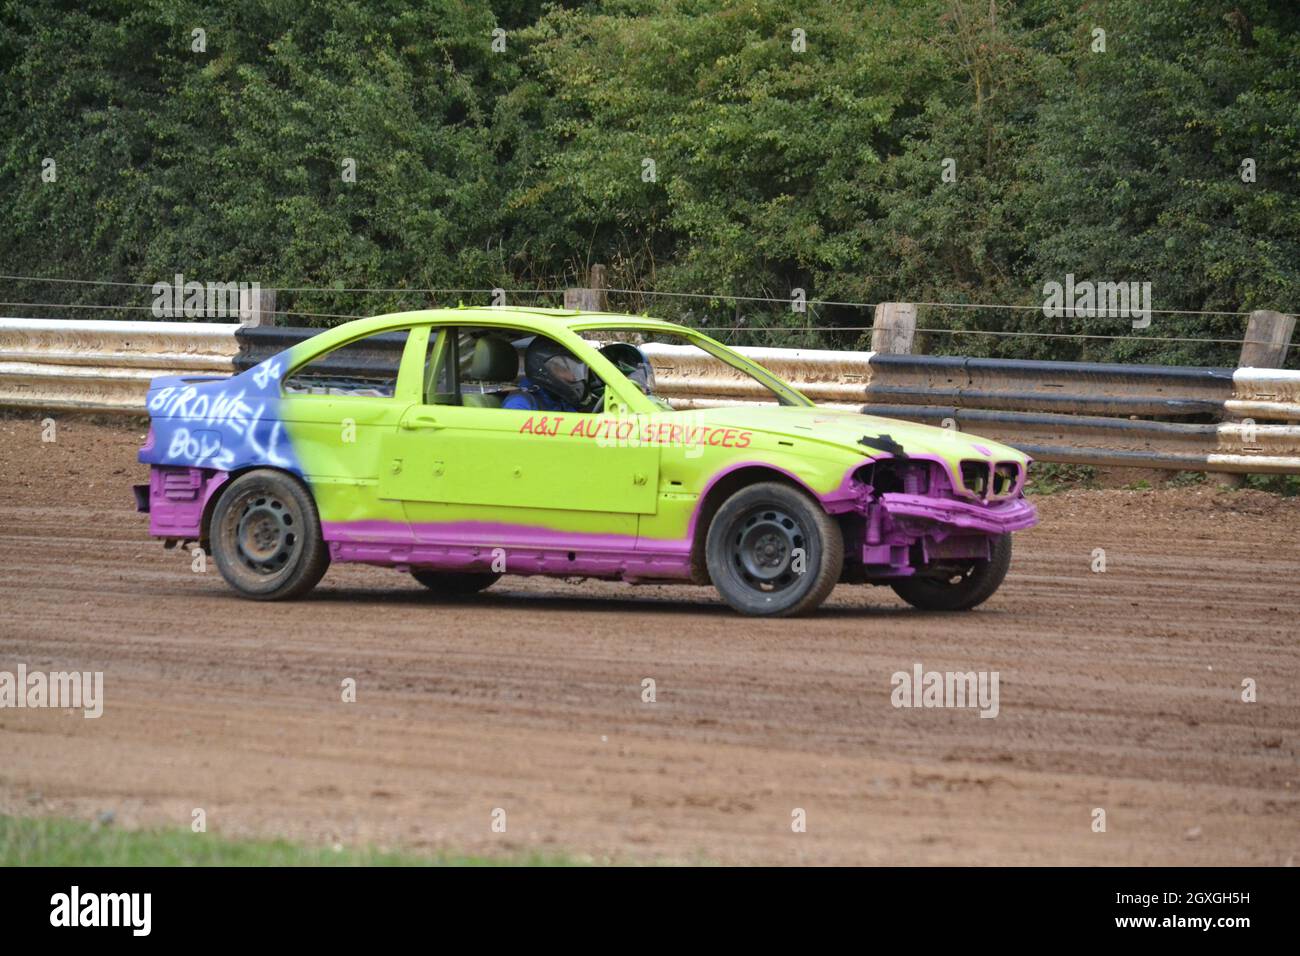 BMW - Drifter Race Car - Grass Track Racing - Dirt Track - Extreme Sport - Motorsports - Hunmanby - Yorkshire - UK Stock Photo